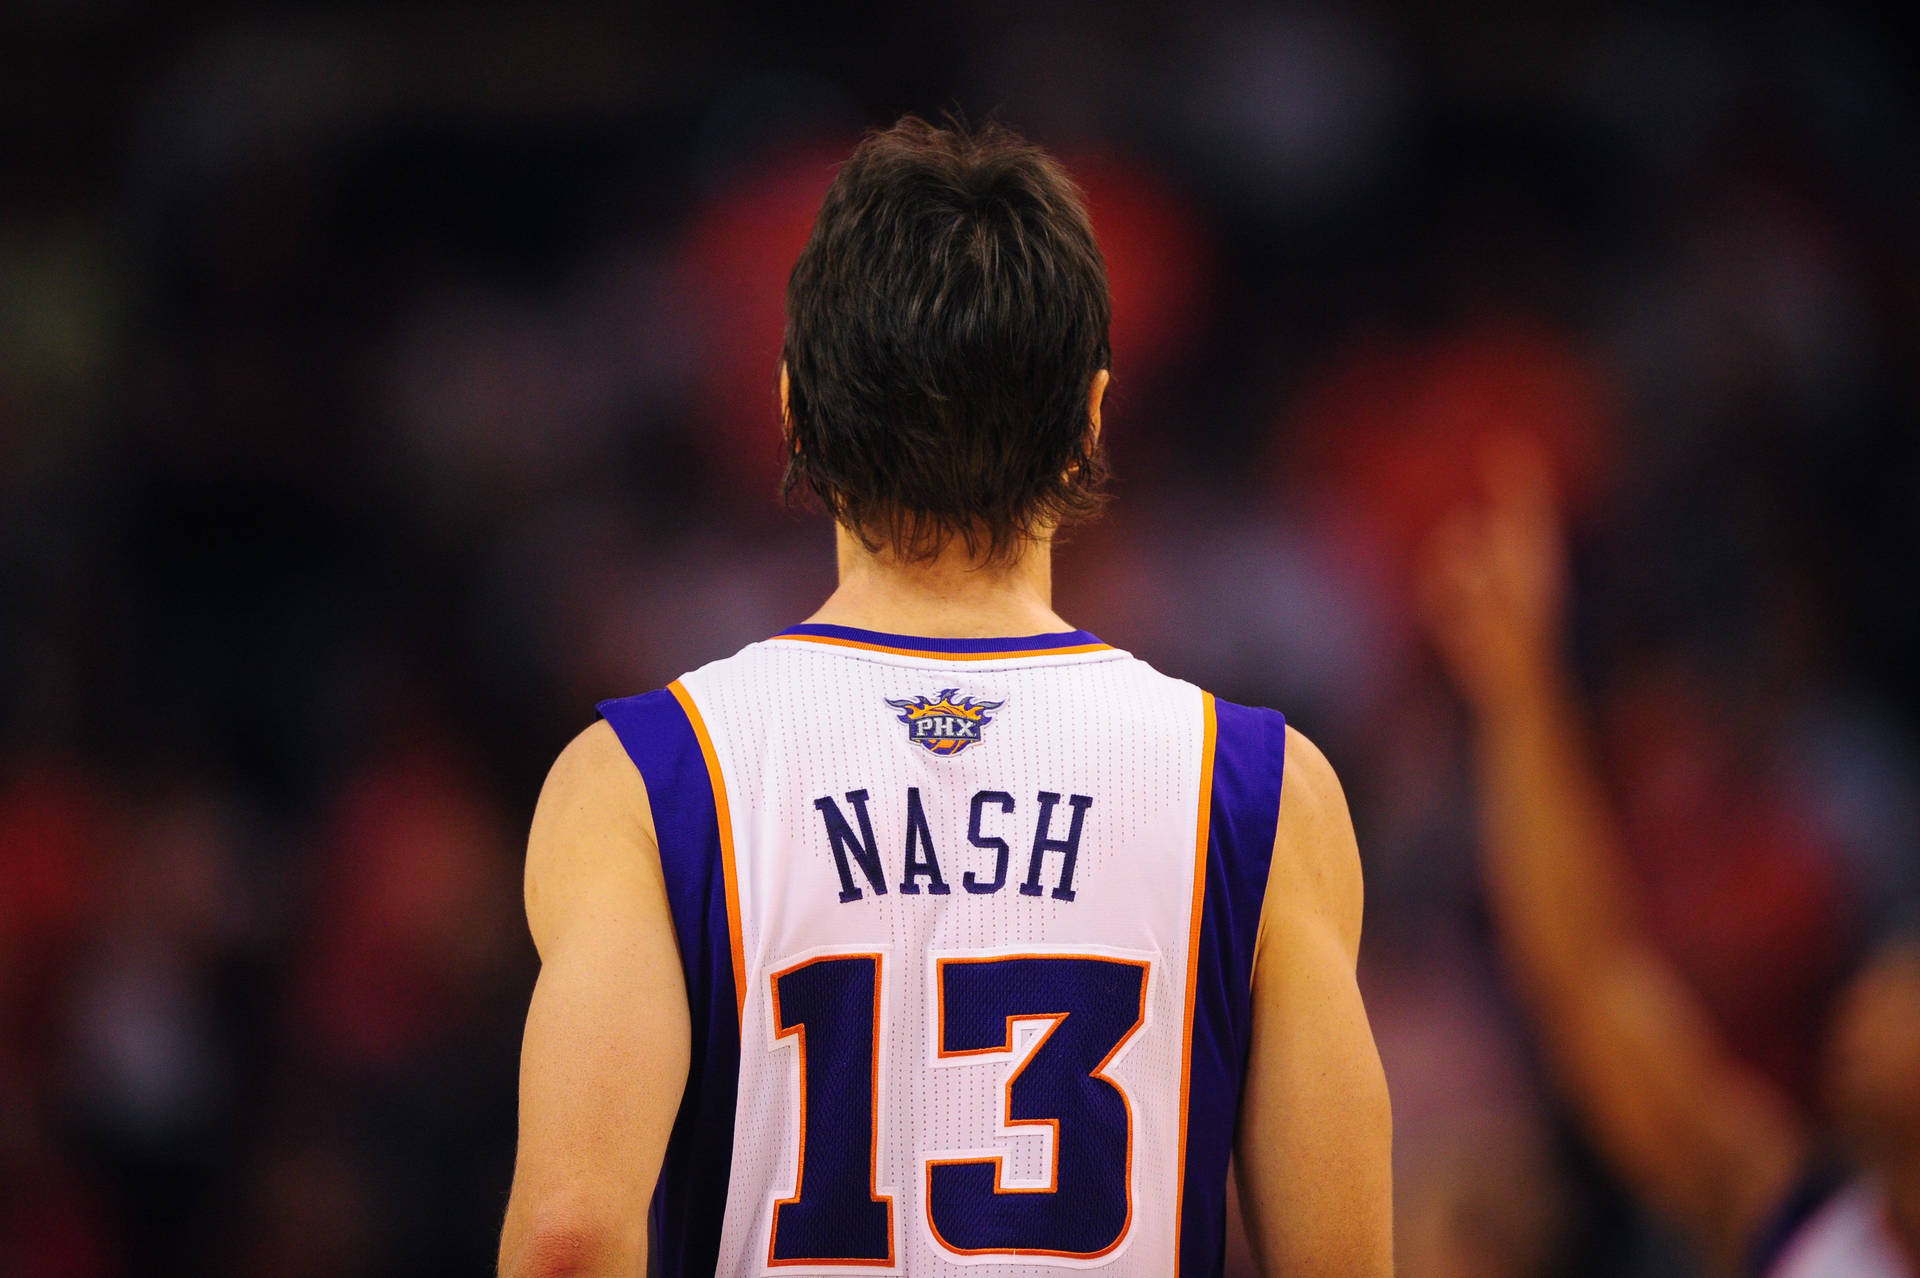 Phoenix Suns Steve Nash Number 13 Background